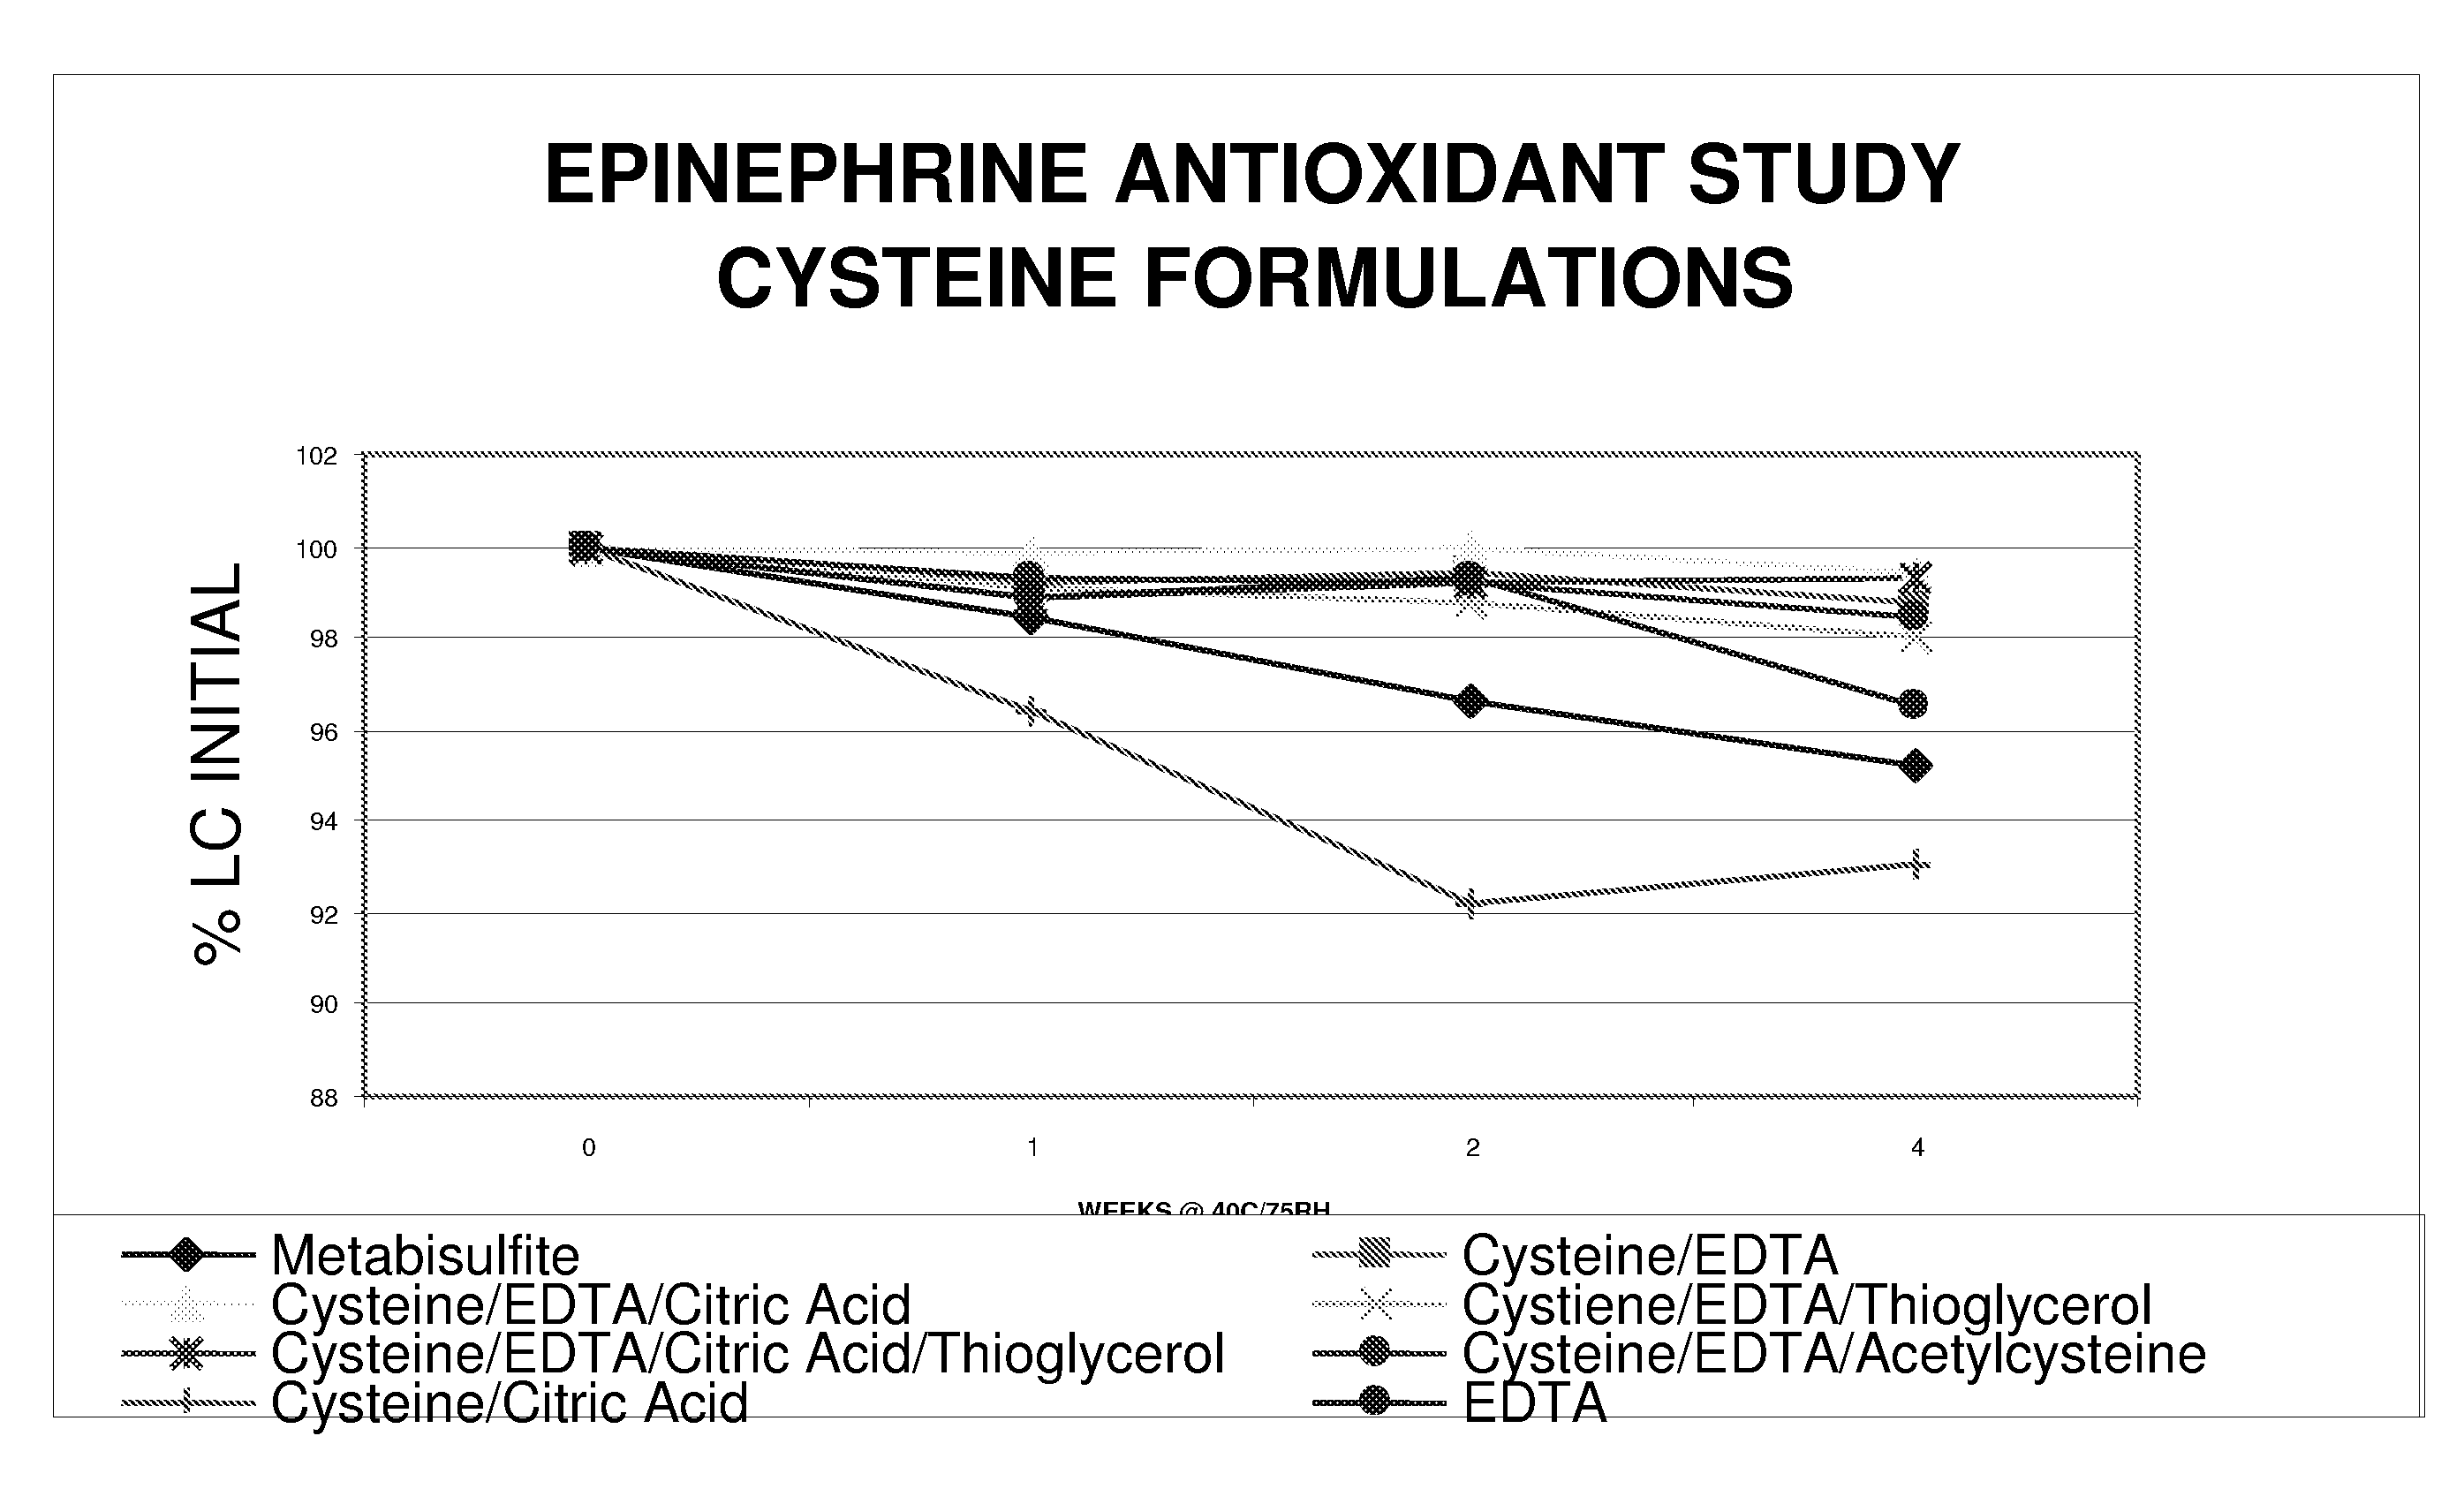 Epinephrine formulations